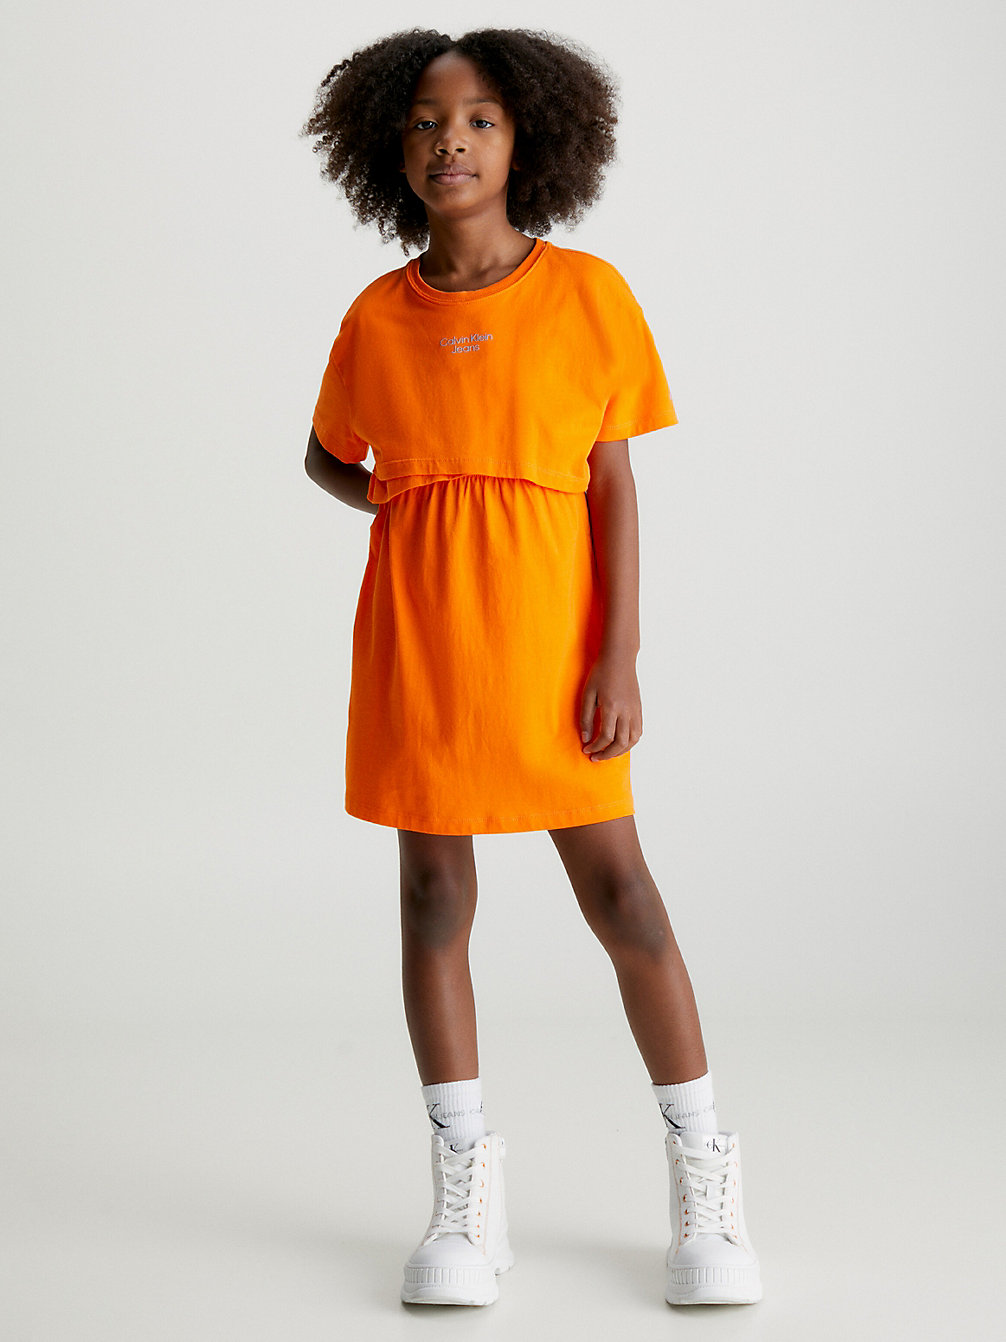 VIBRANT ORANGE > Kopertowa Sukienka Typu T-Shirt > undefined girls - Calvin Klein